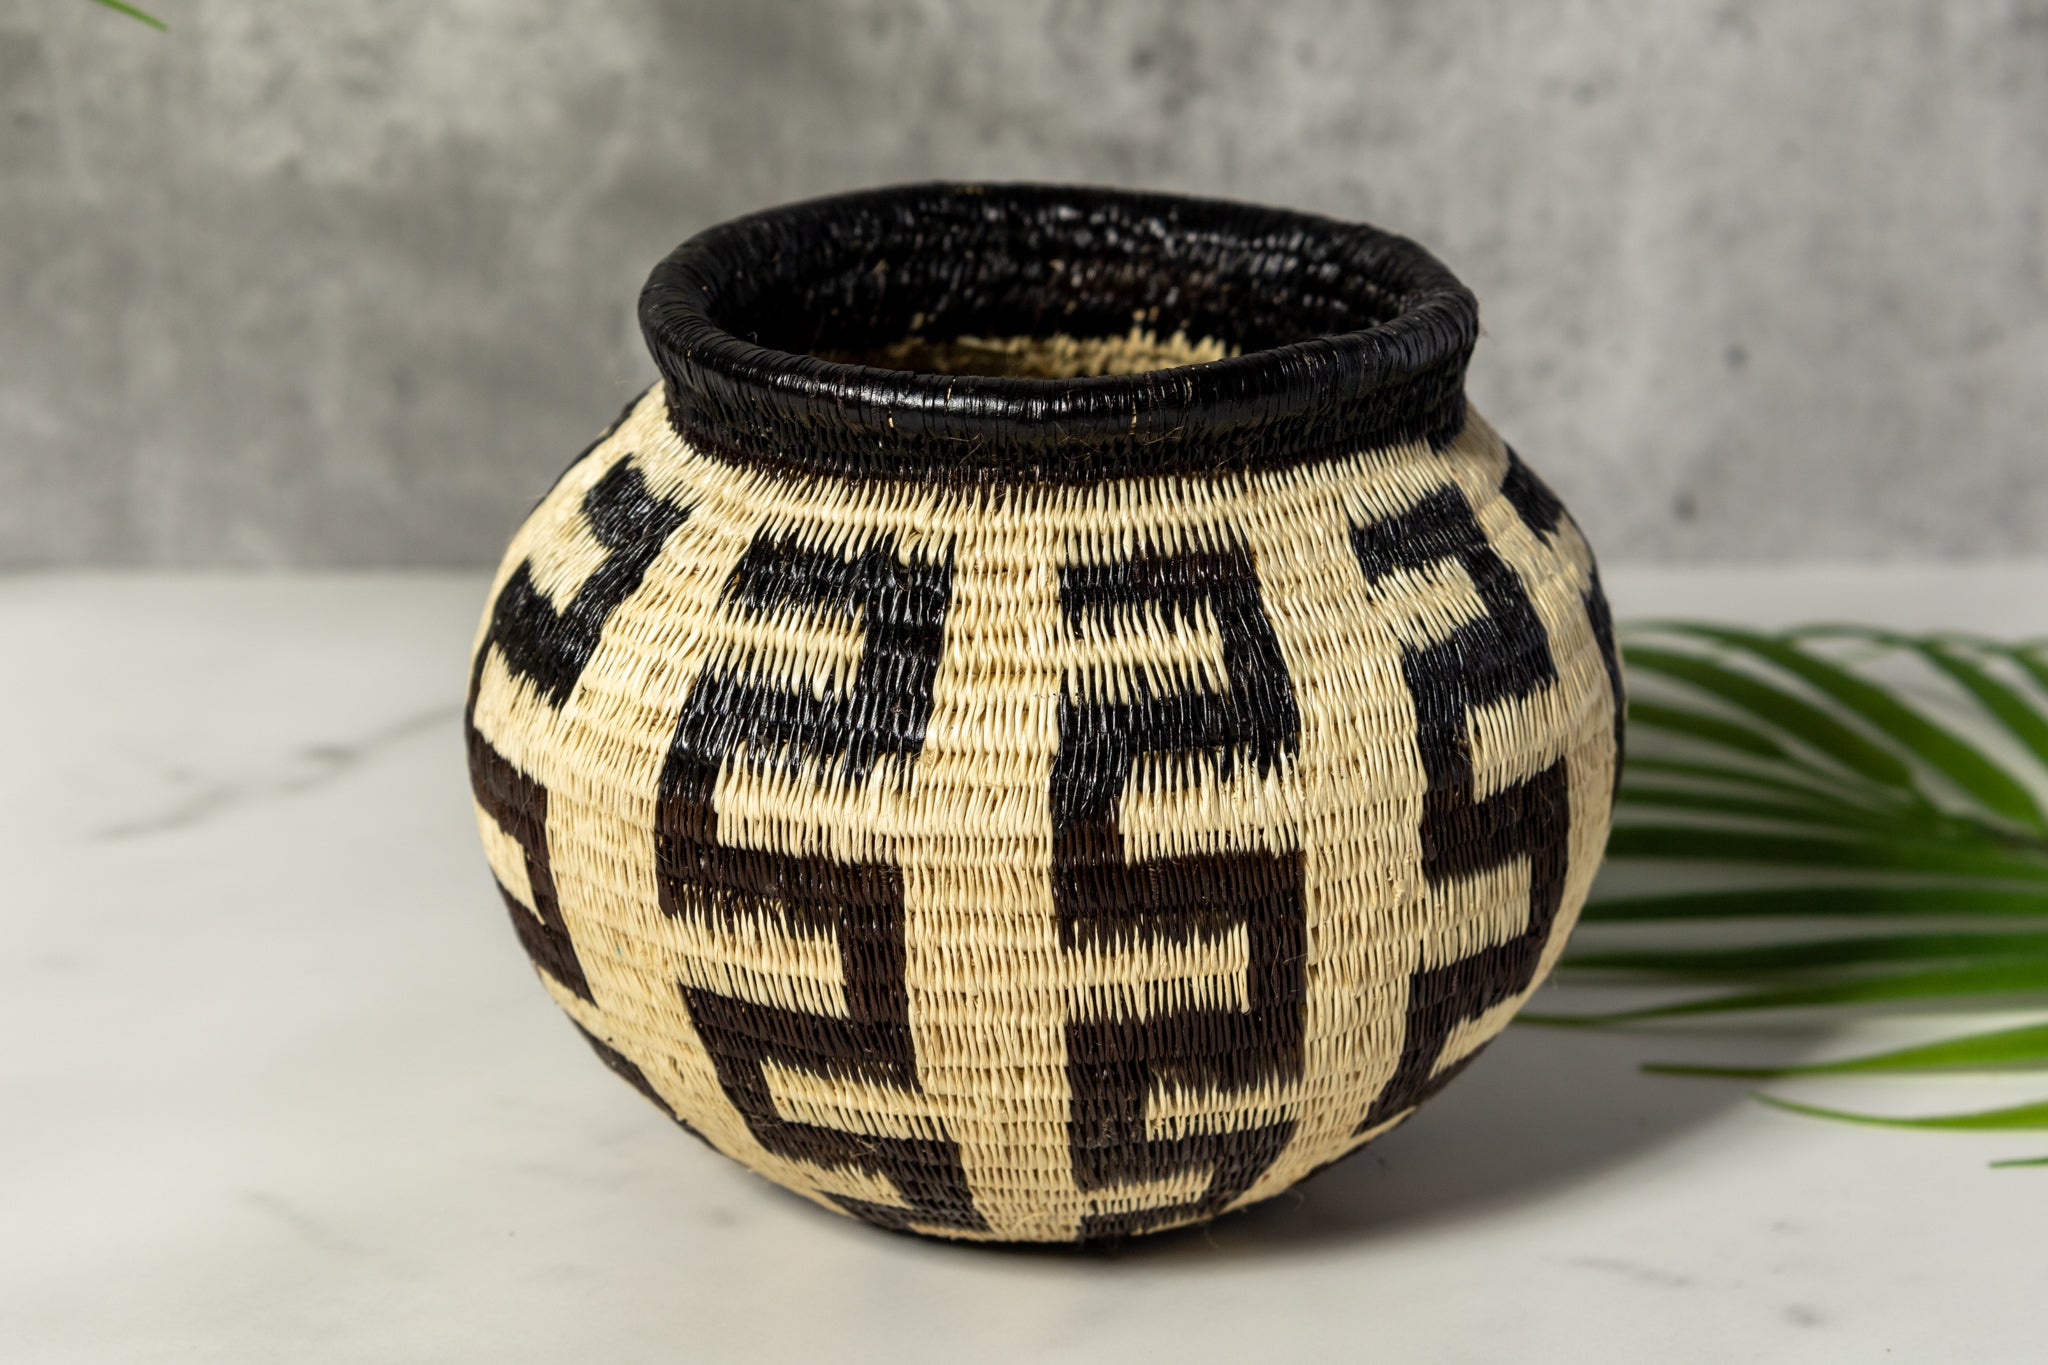 Black And White Southwest Design Woven Basket